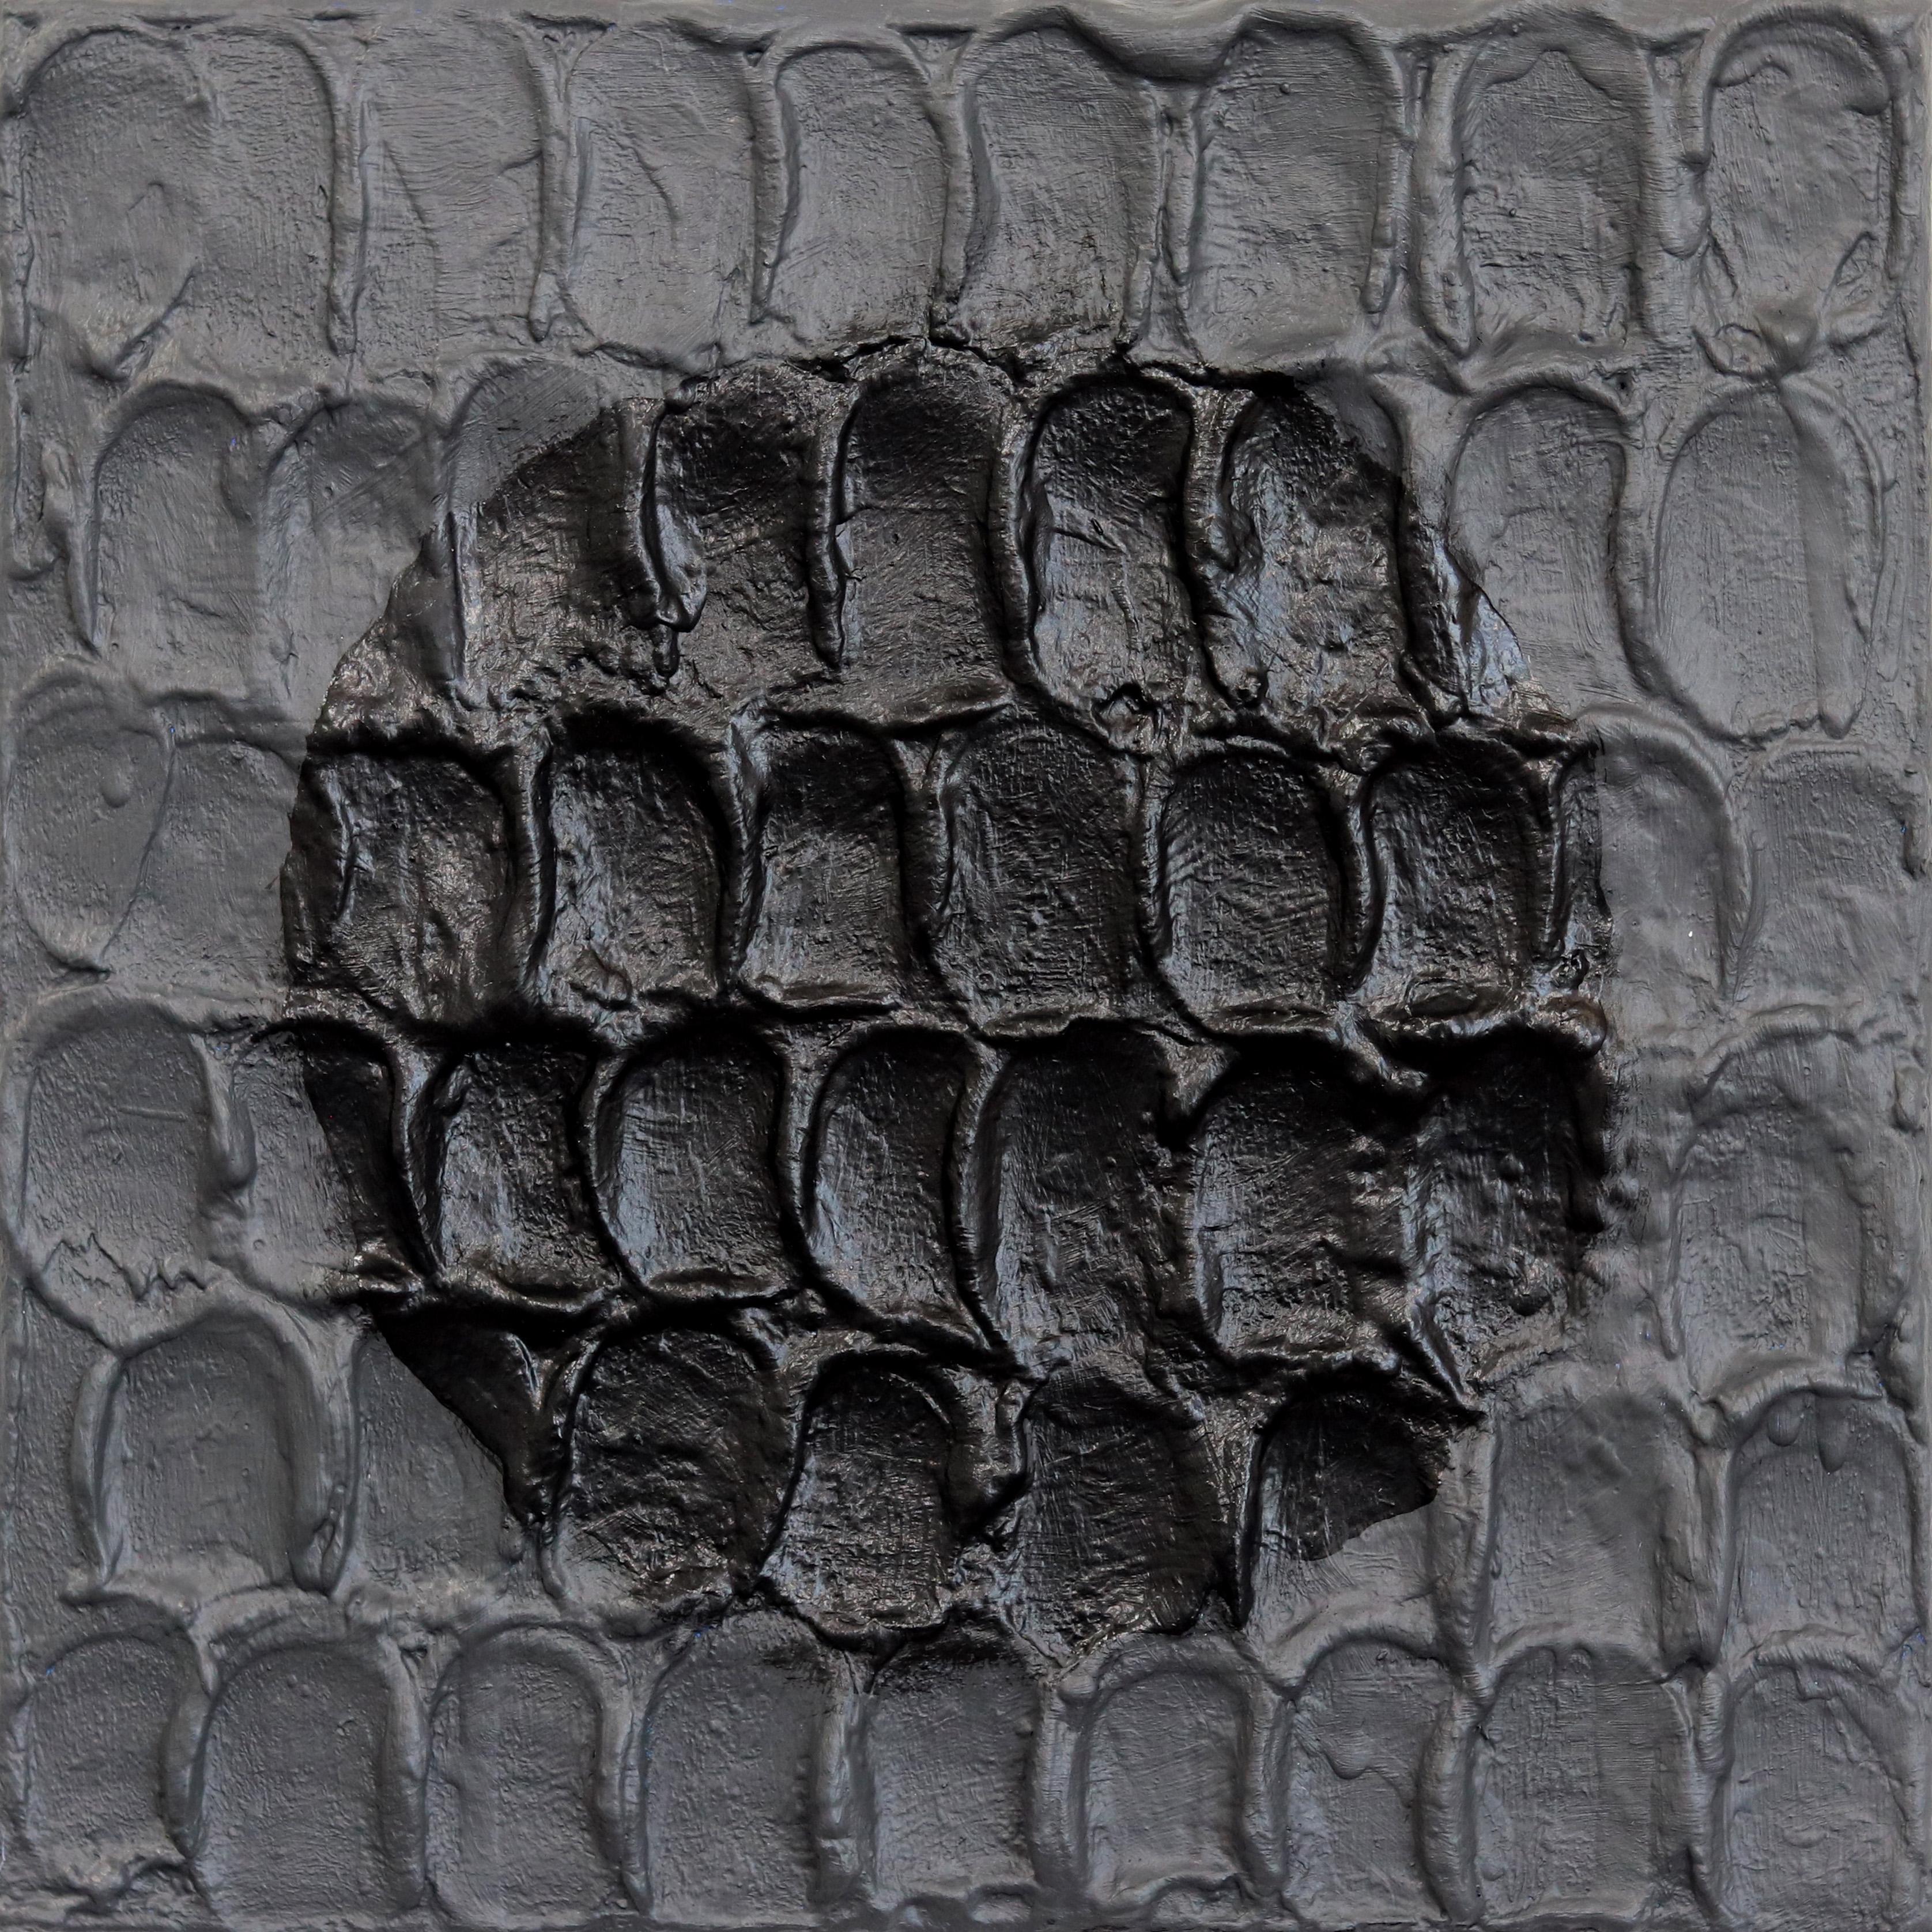 Len Klikunas Abstract Painting - Primitive Modern #2 - Black Textural Abstract Minimalist Artwork on Canvas